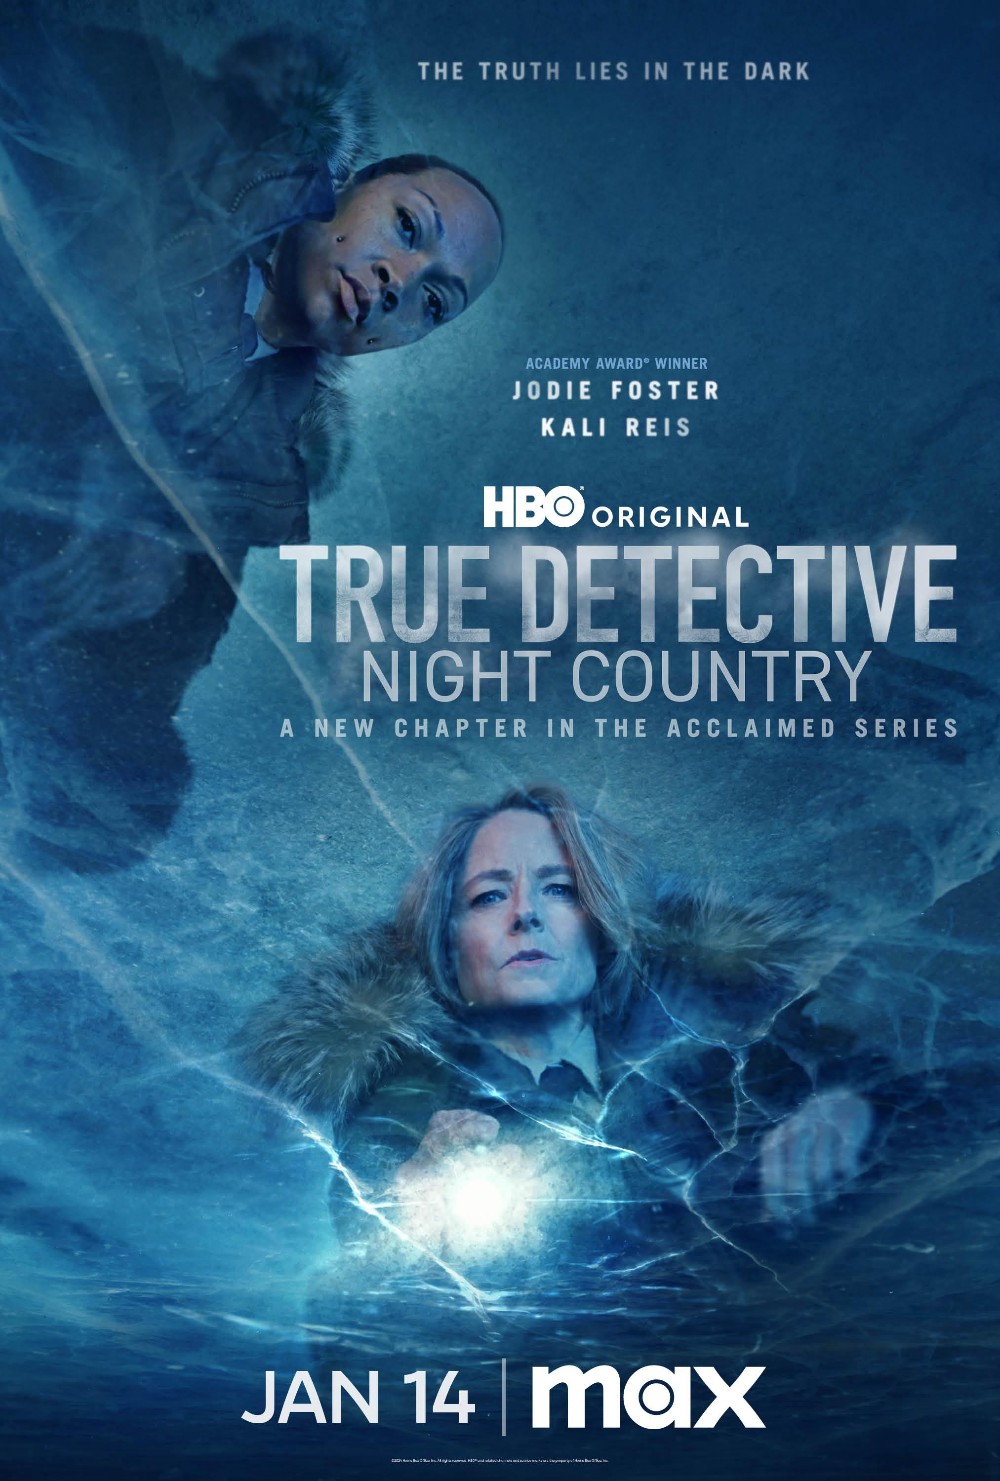 True Detective 2014 Season 3 Complete [720p] BluRay (x264) Fc6b5931ed8fc617de6962040eeabcb8